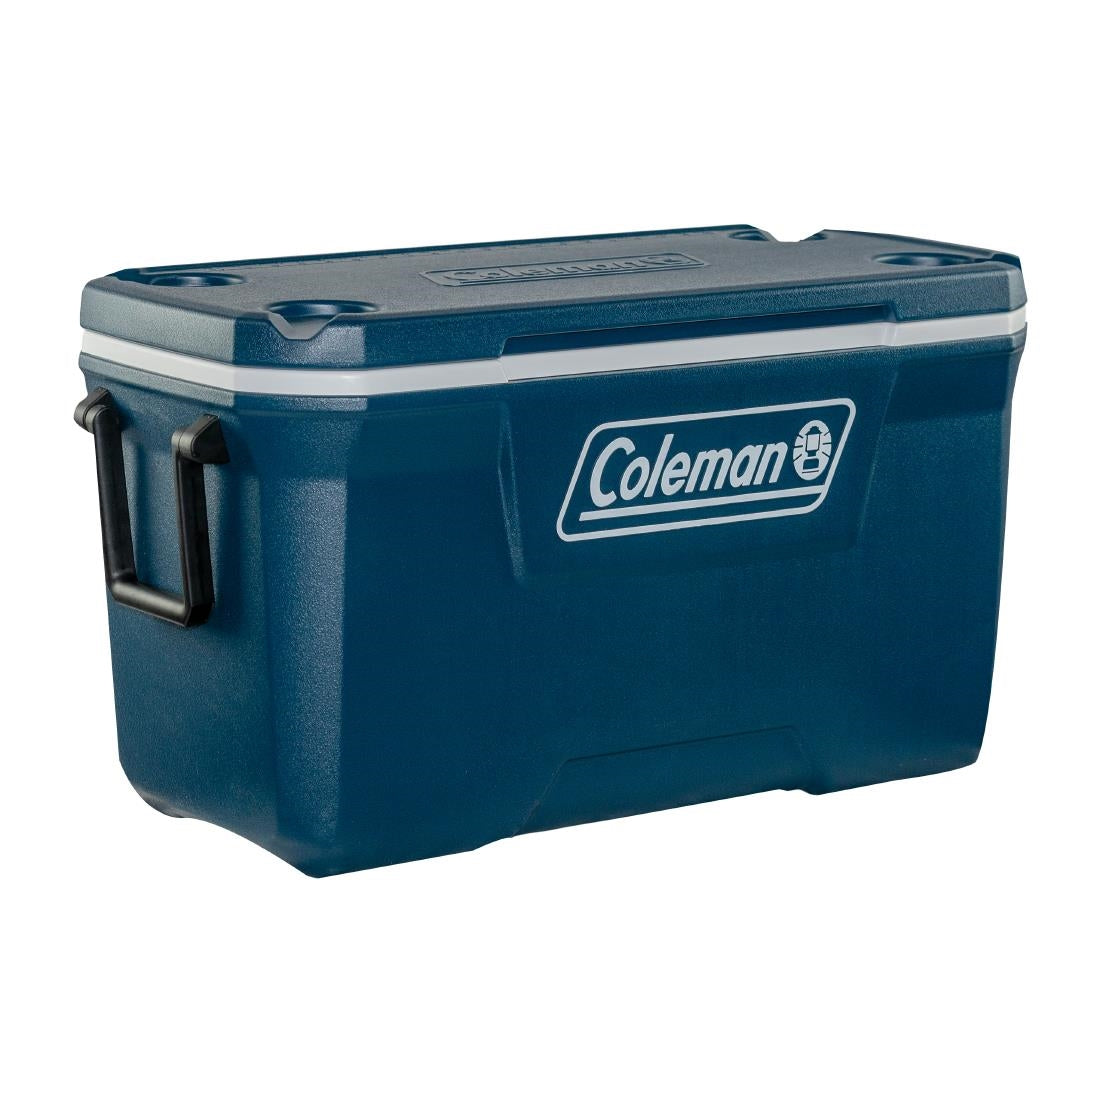 CX042 Coleman Xtreme Cooler Blue 66Ltr JD Catering Equipment Solutions Ltd